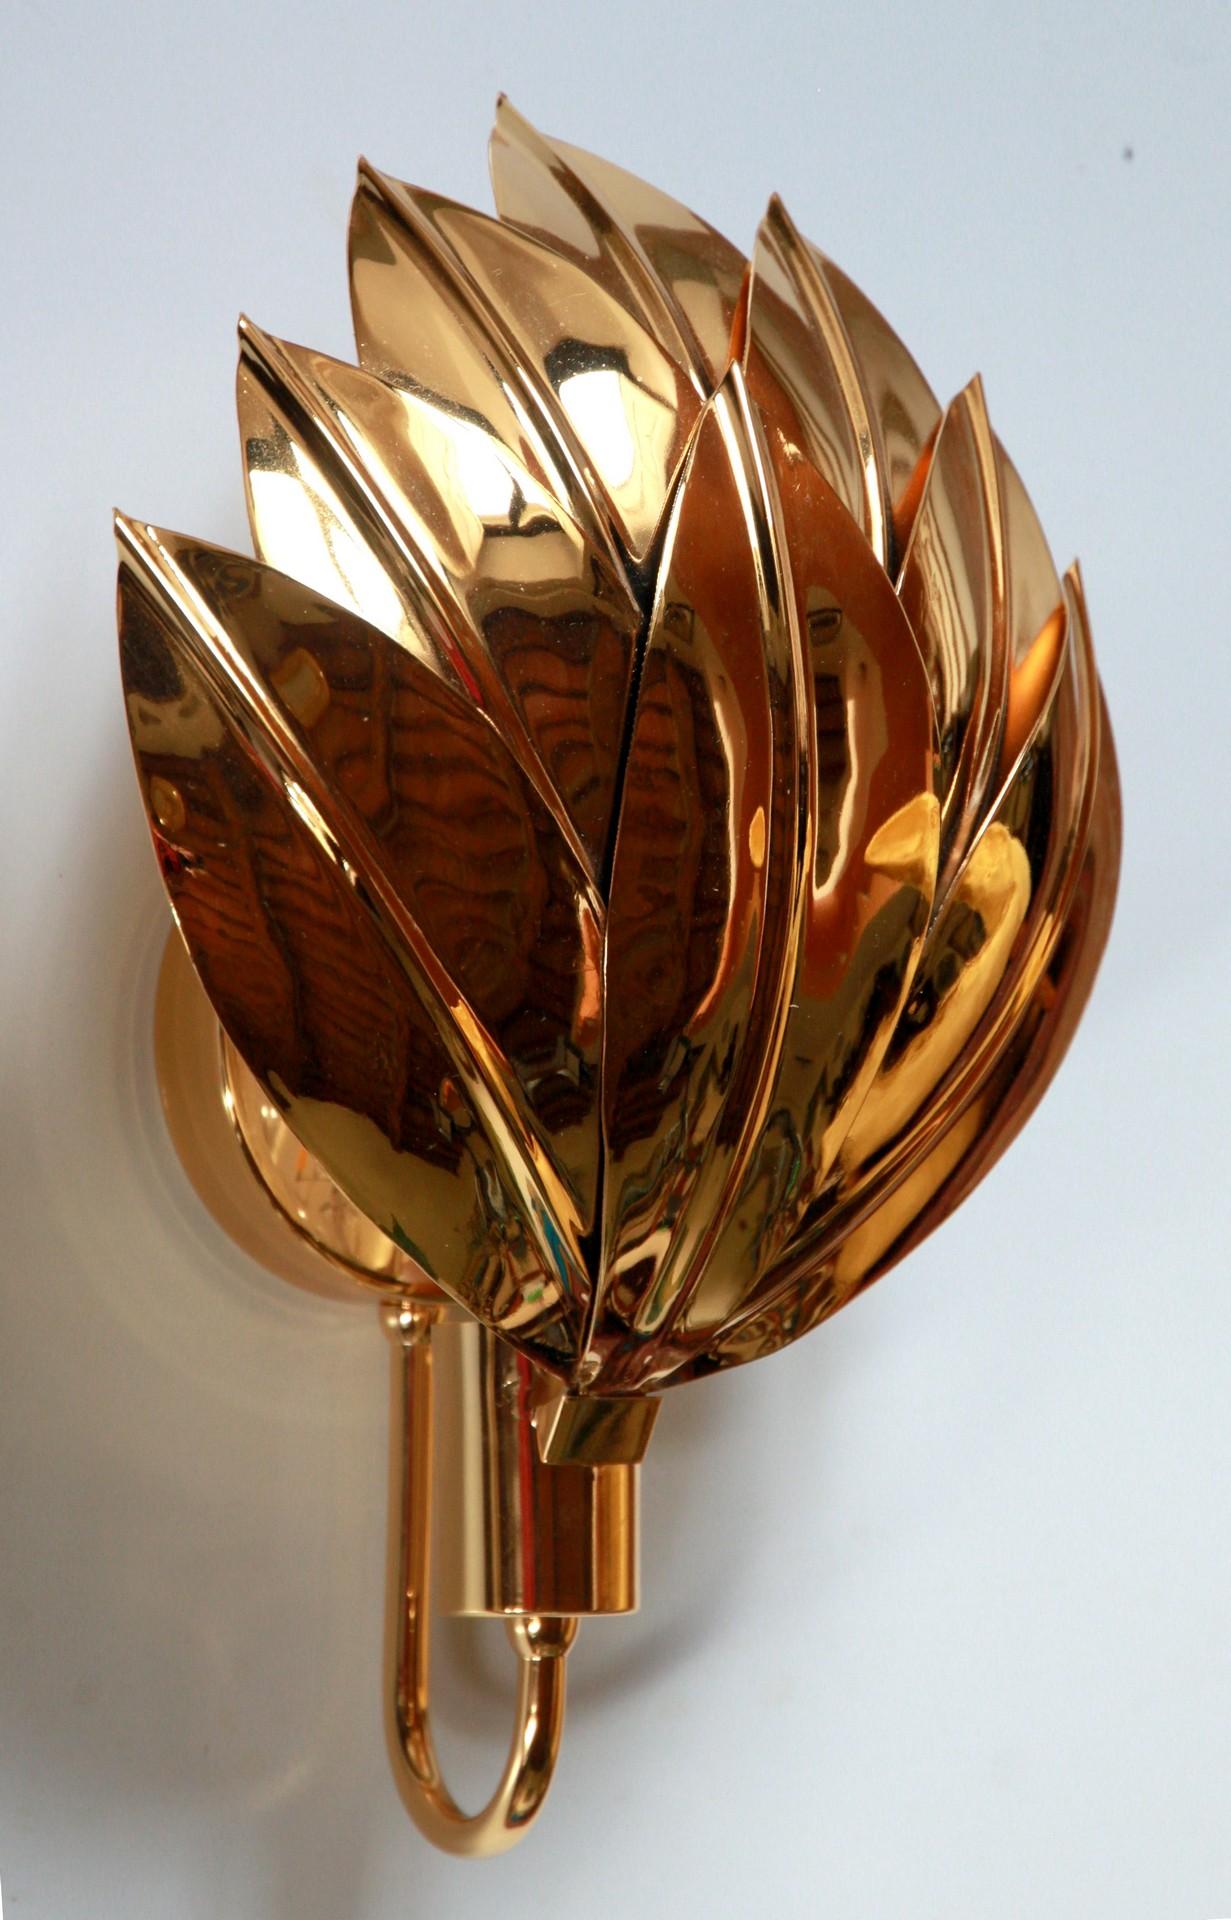 Italian Full Set of 9 Palm Sconces, Brass Gold-Plated, Maison Jansen Attribution